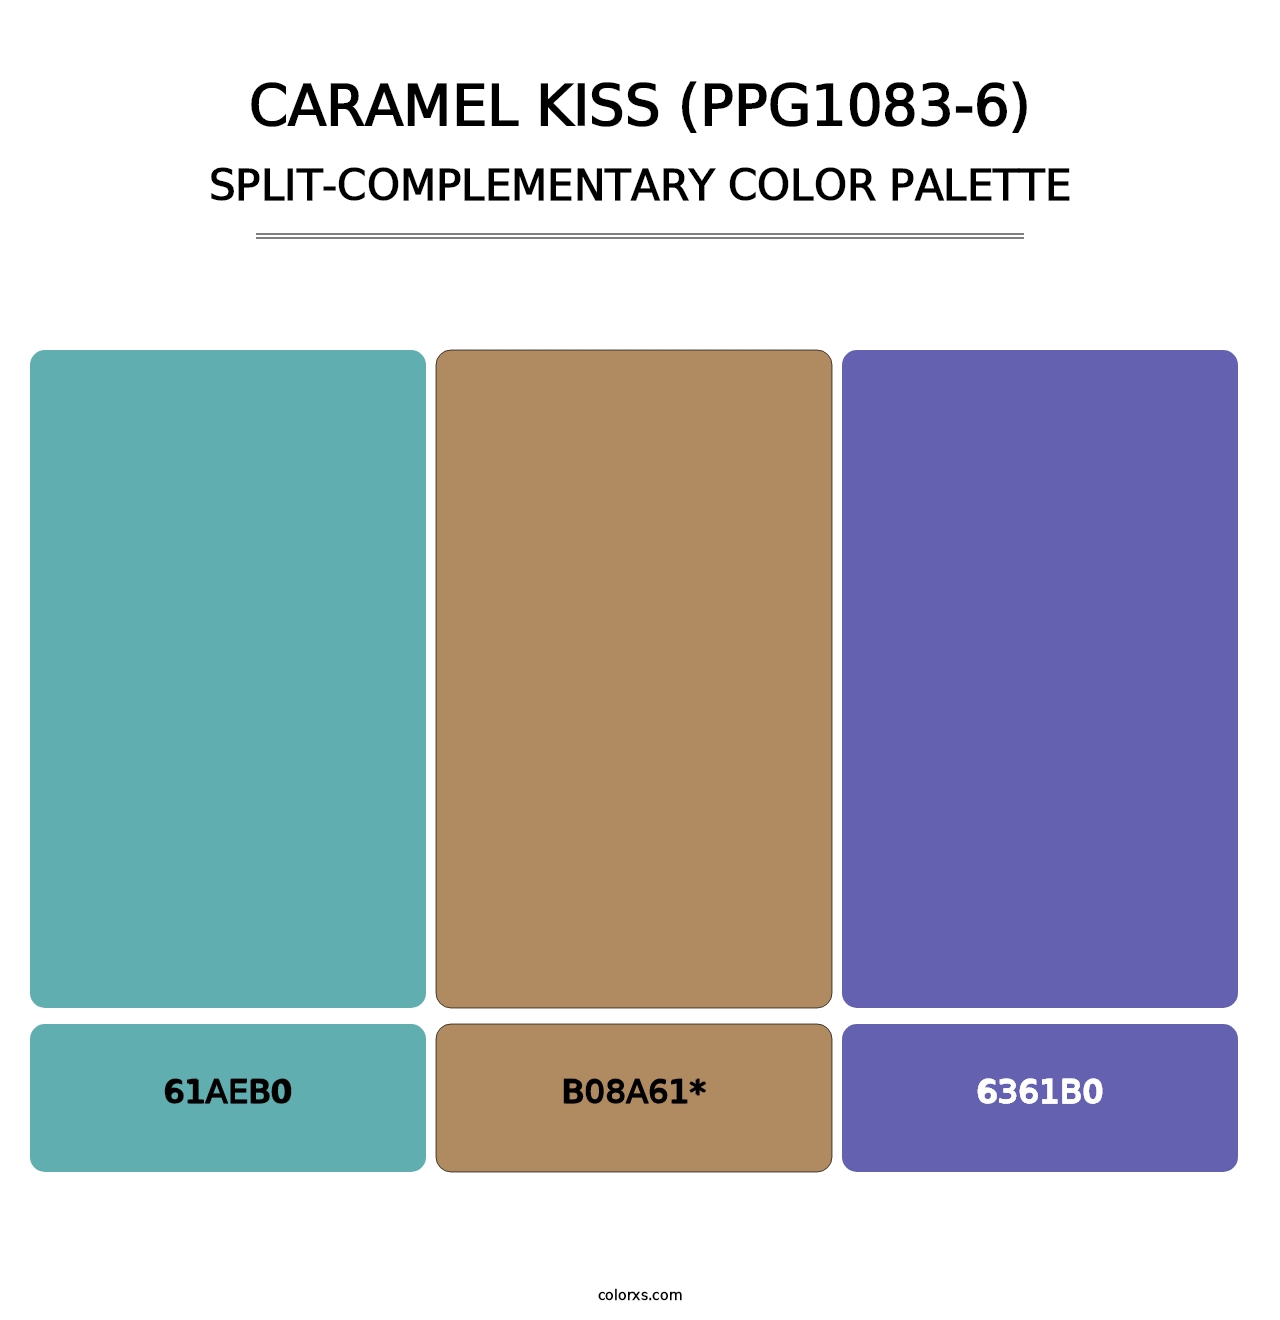 Caramel Kiss (PPG1083-6) - Split-Complementary Color Palette